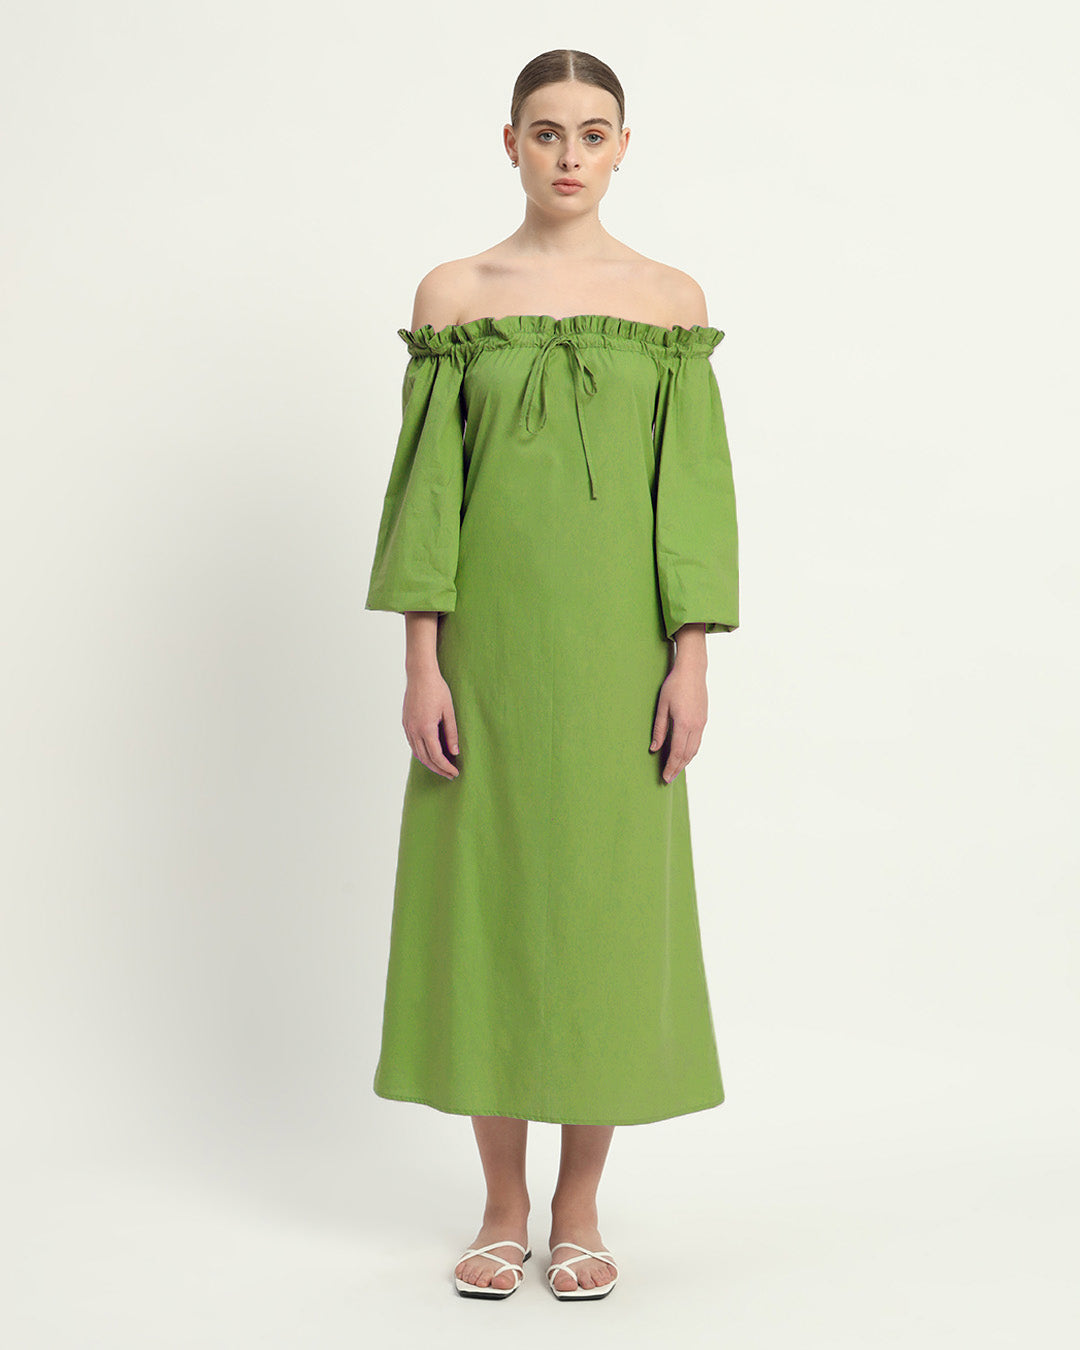 The Carlisle Fern Cotton Dress